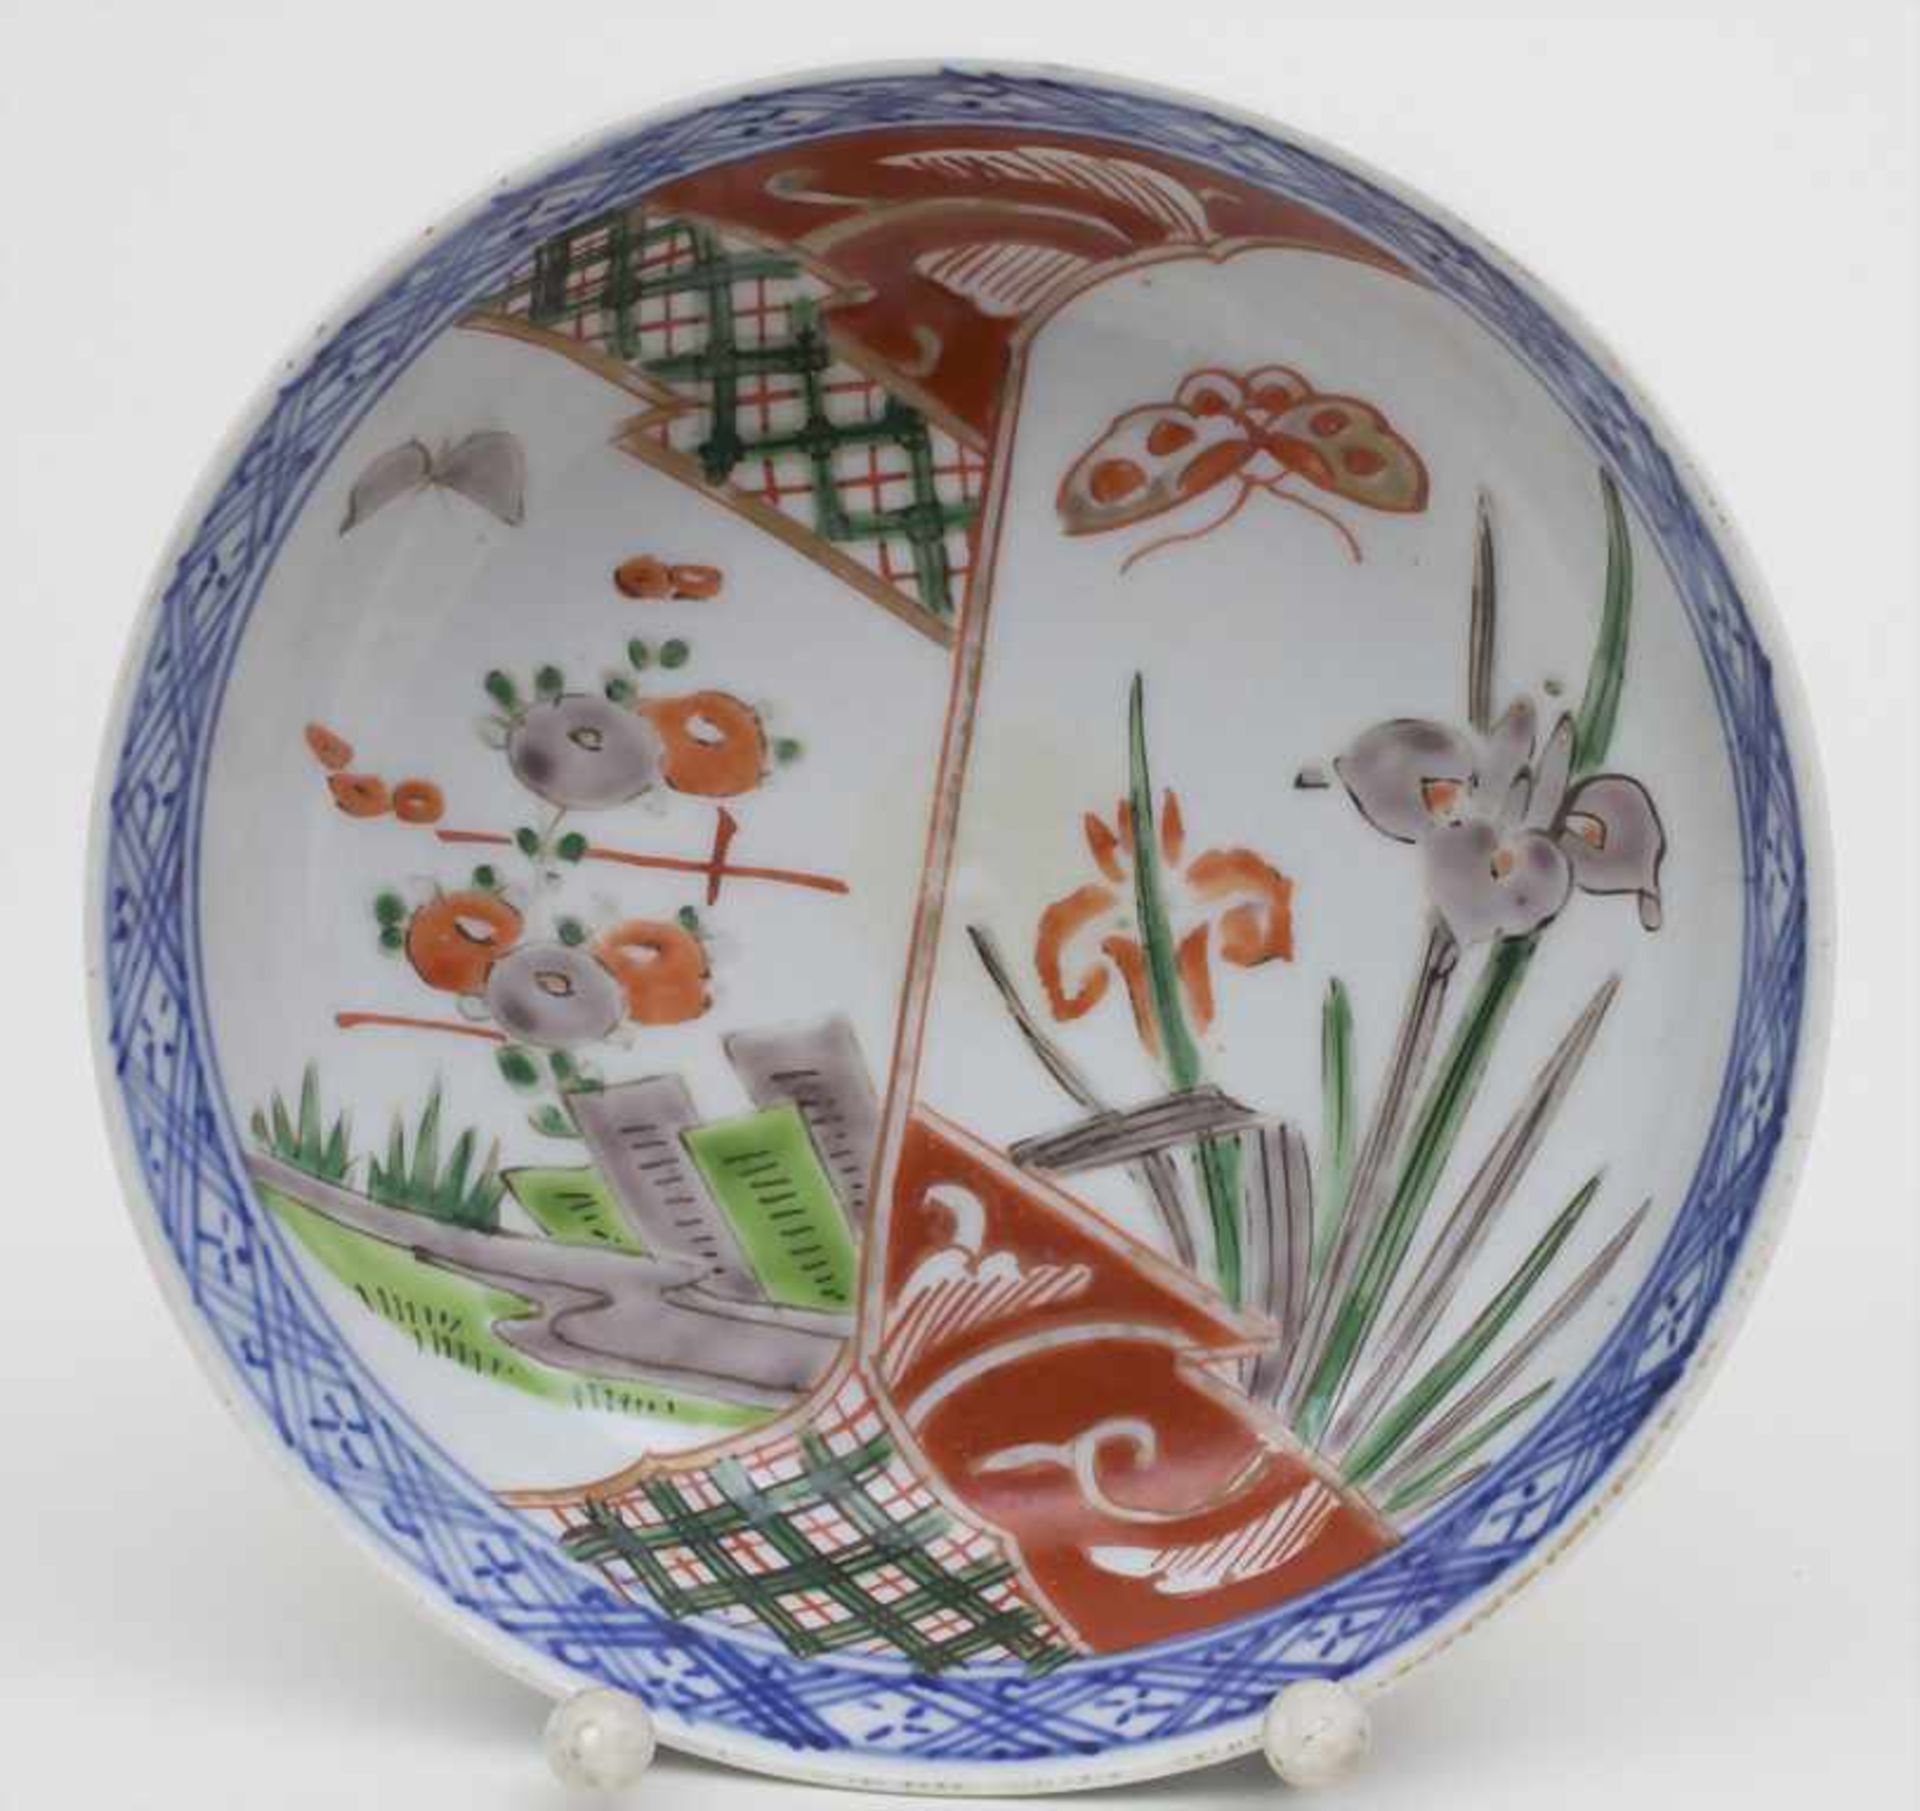 2 Imari-Schalen / Two Imari bowls, Japan, 18./19. Jh.Material: Porzellan, mit Emailfarben bemalt, - Bild 3 aus 5